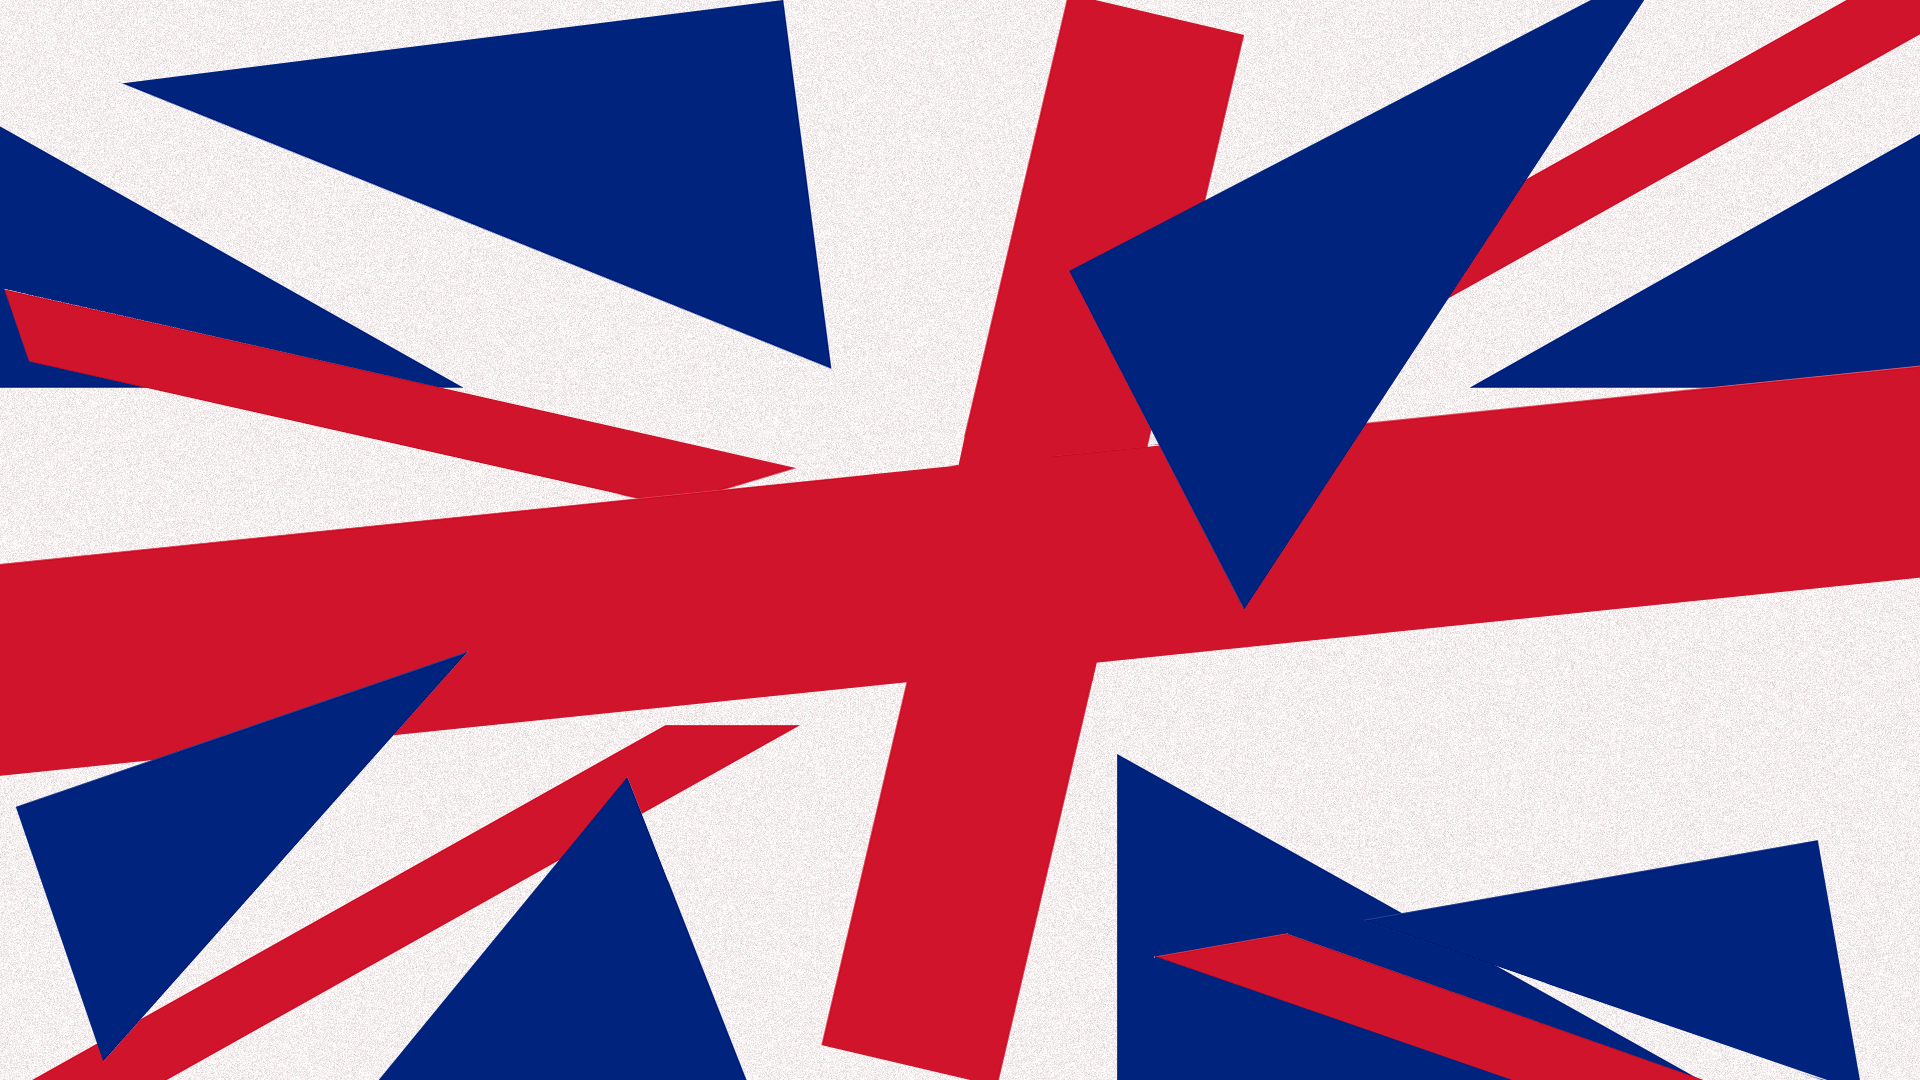 The British flag falls apart